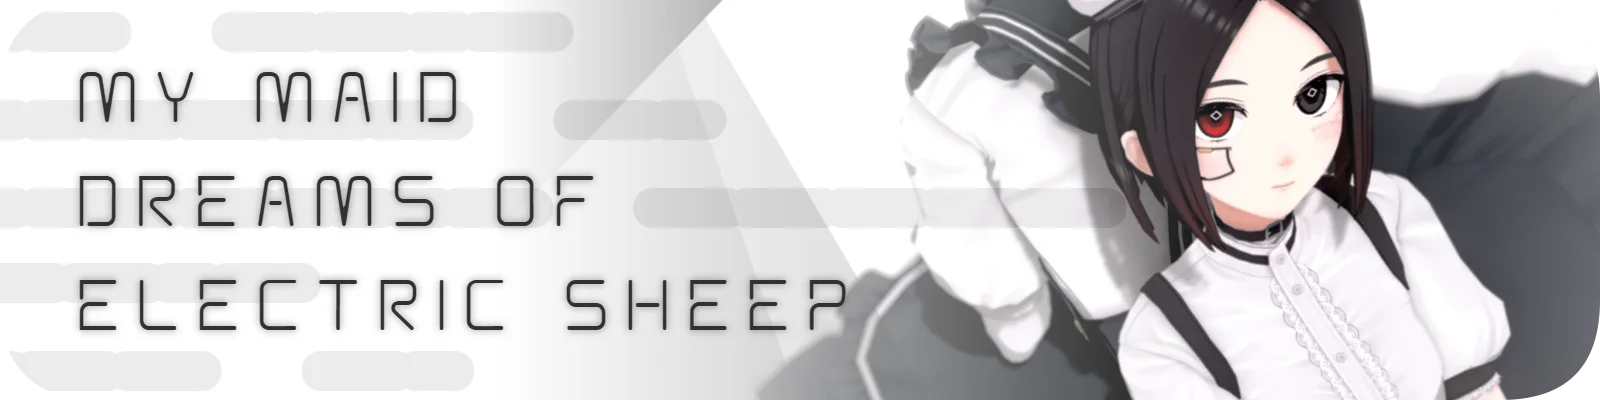 My Maid Dreams of Electric Sheep v.0.5.12